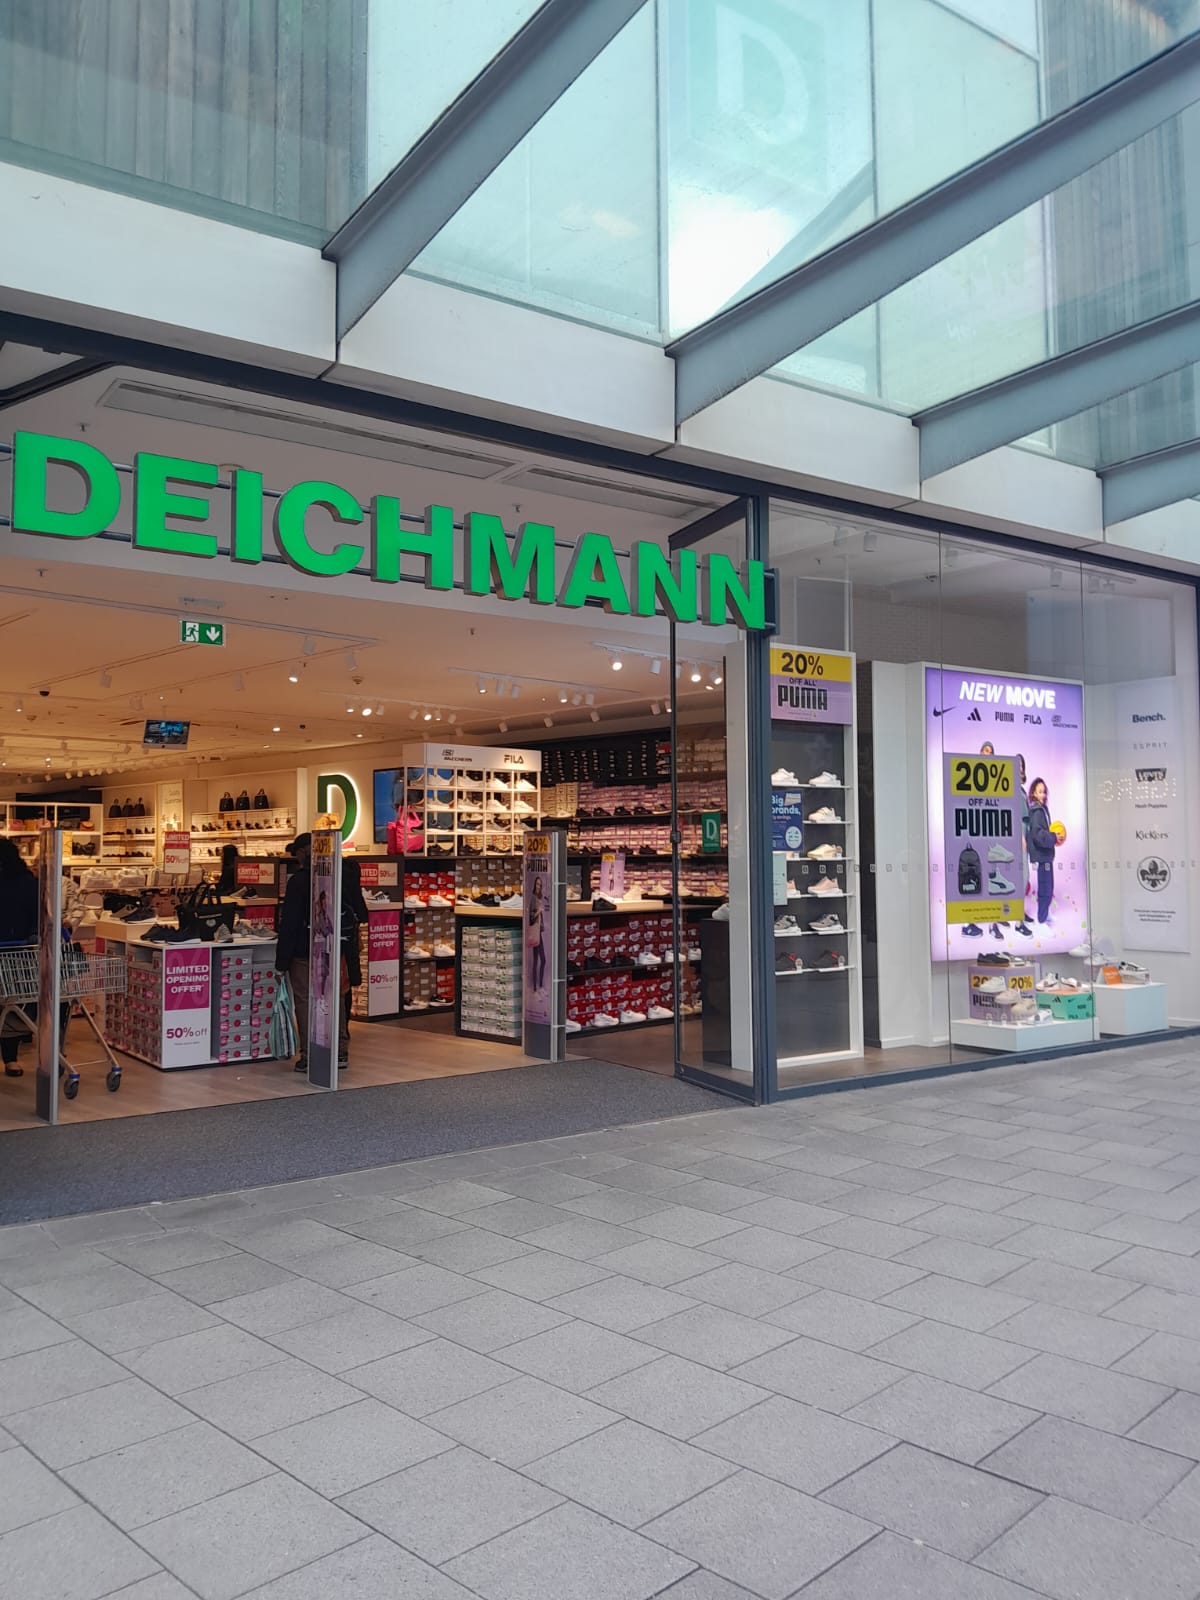 Deichmann opening sale!